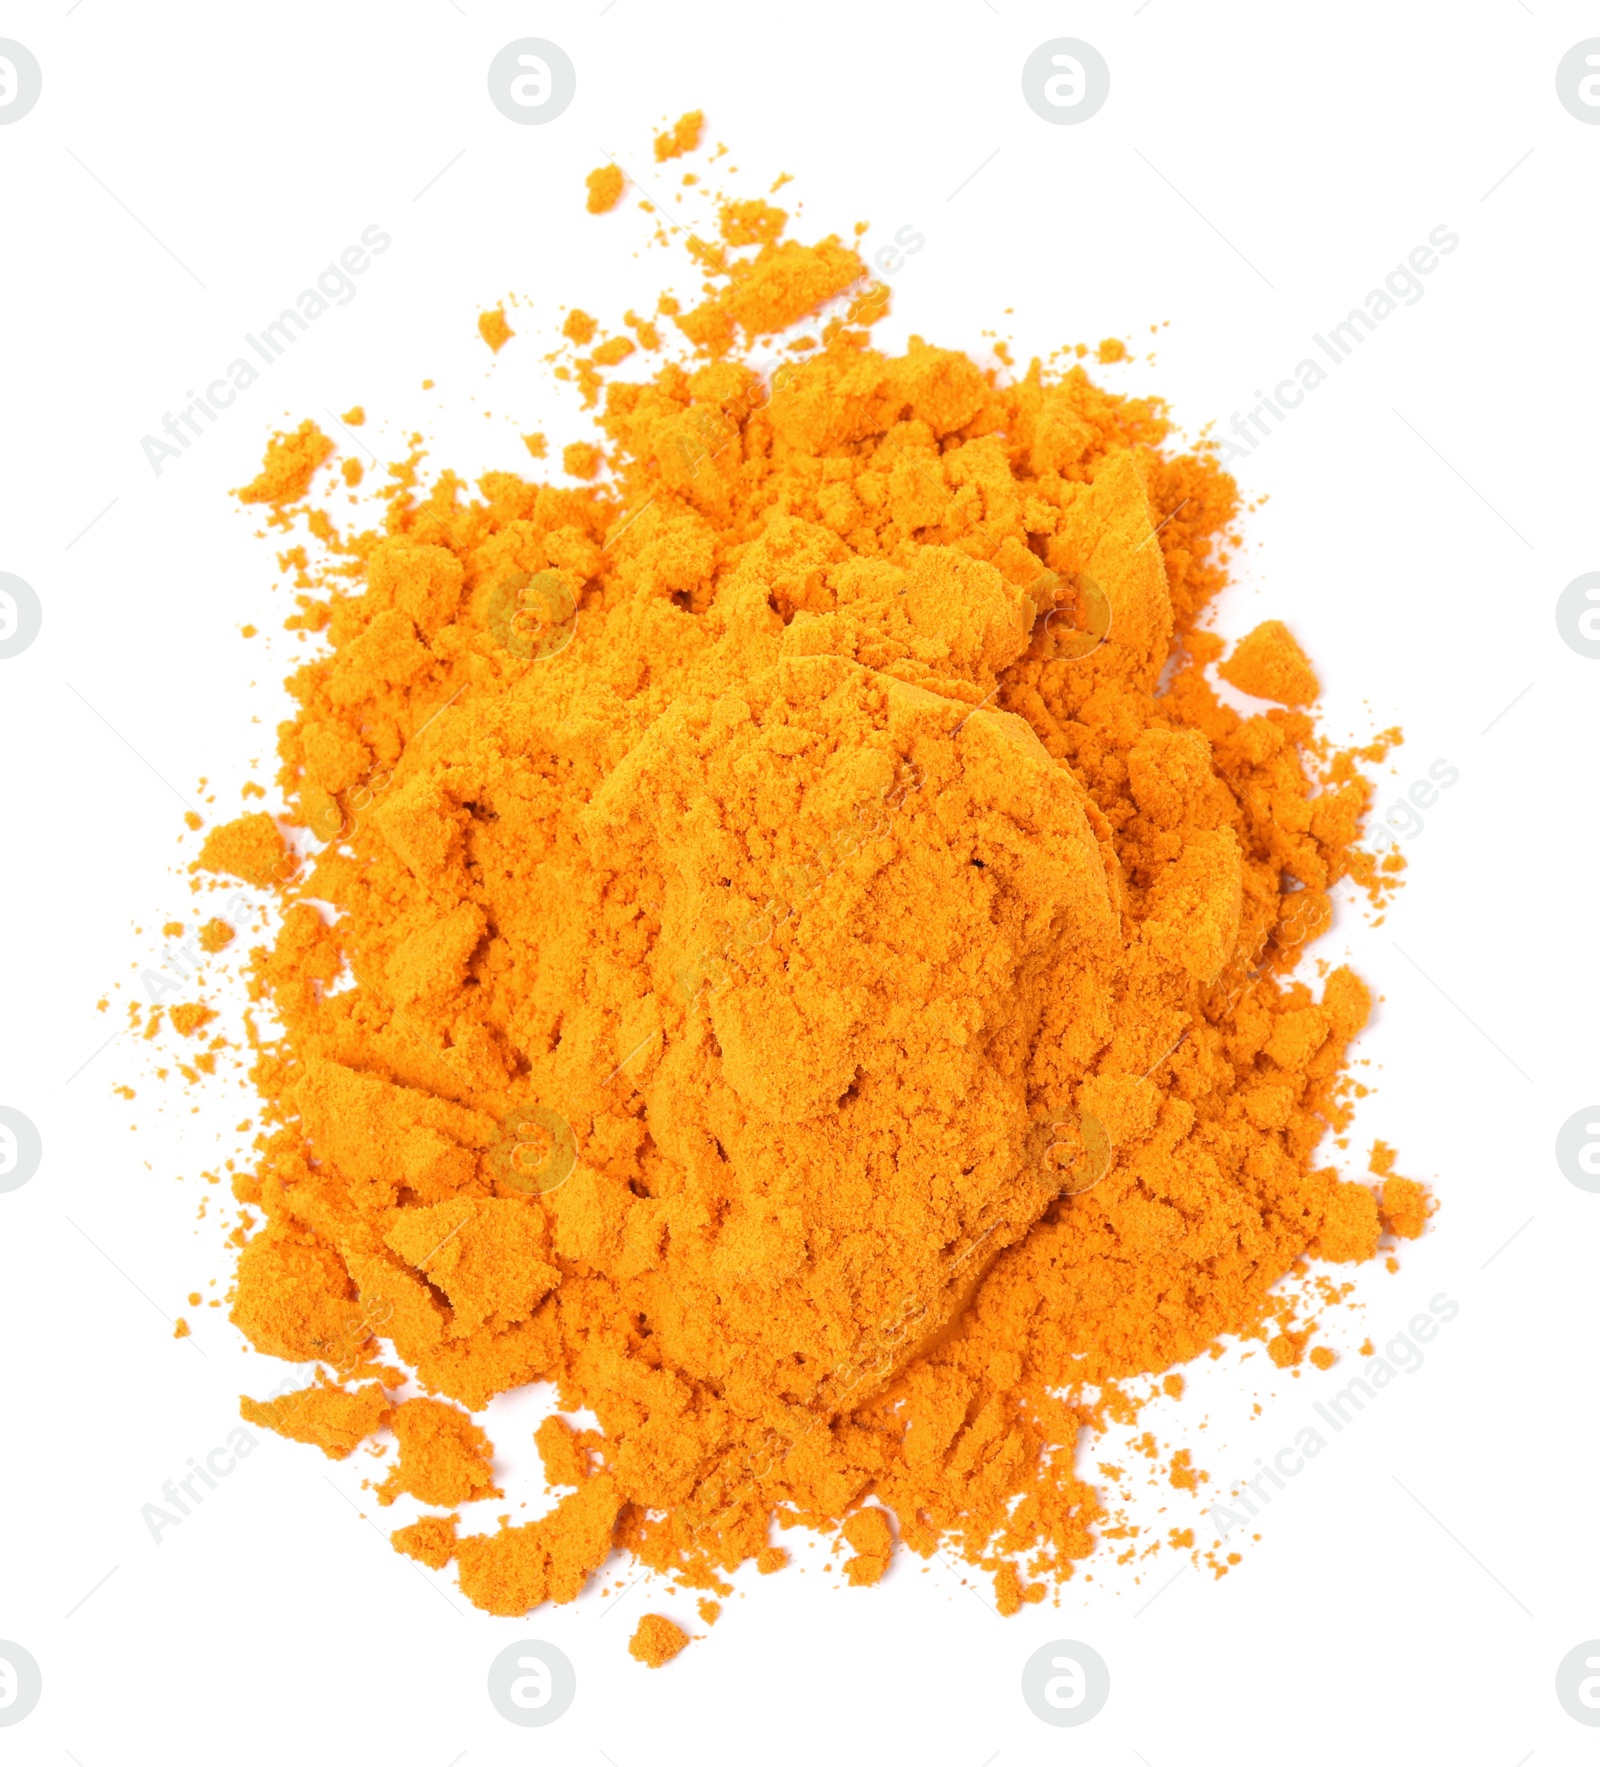 Photo of Heap of saffron powder on white background, top view